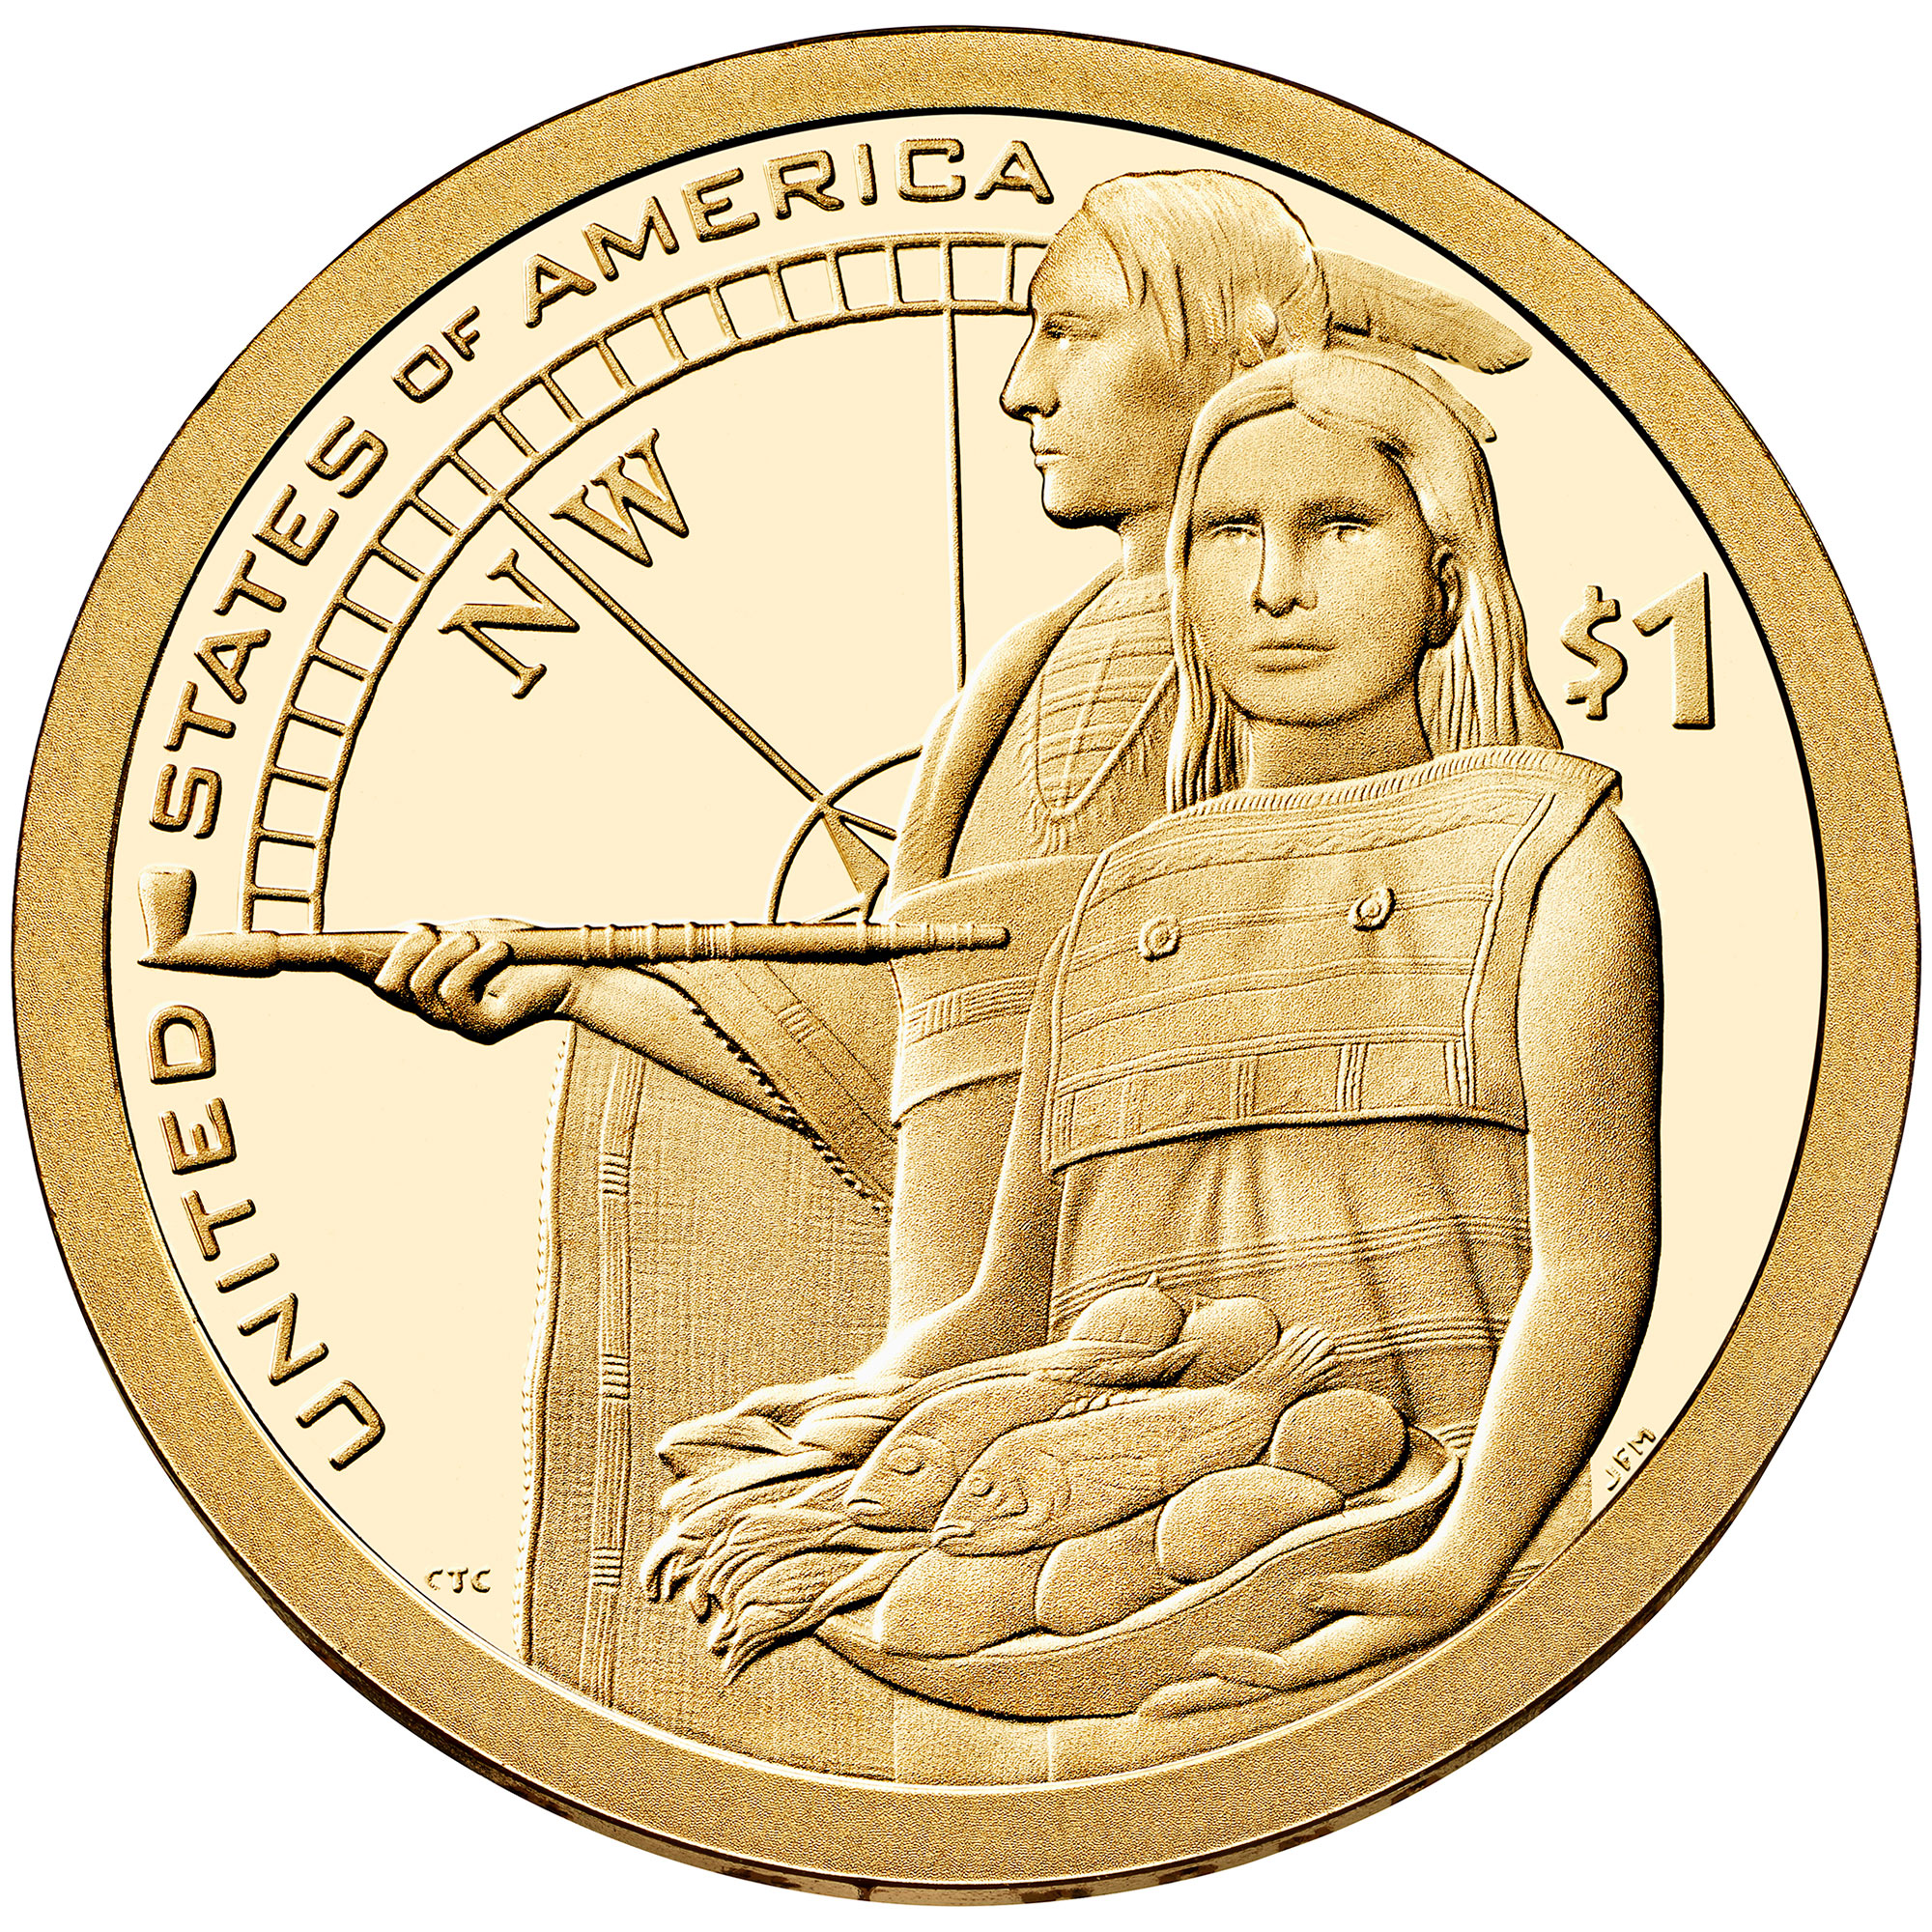 1 доллар сакагавея. Монеты доллары США Сакагавея. 1 Доллар США Сакагавея. Монета 1 доллар США. 1 Доллар USA Sacagawea.